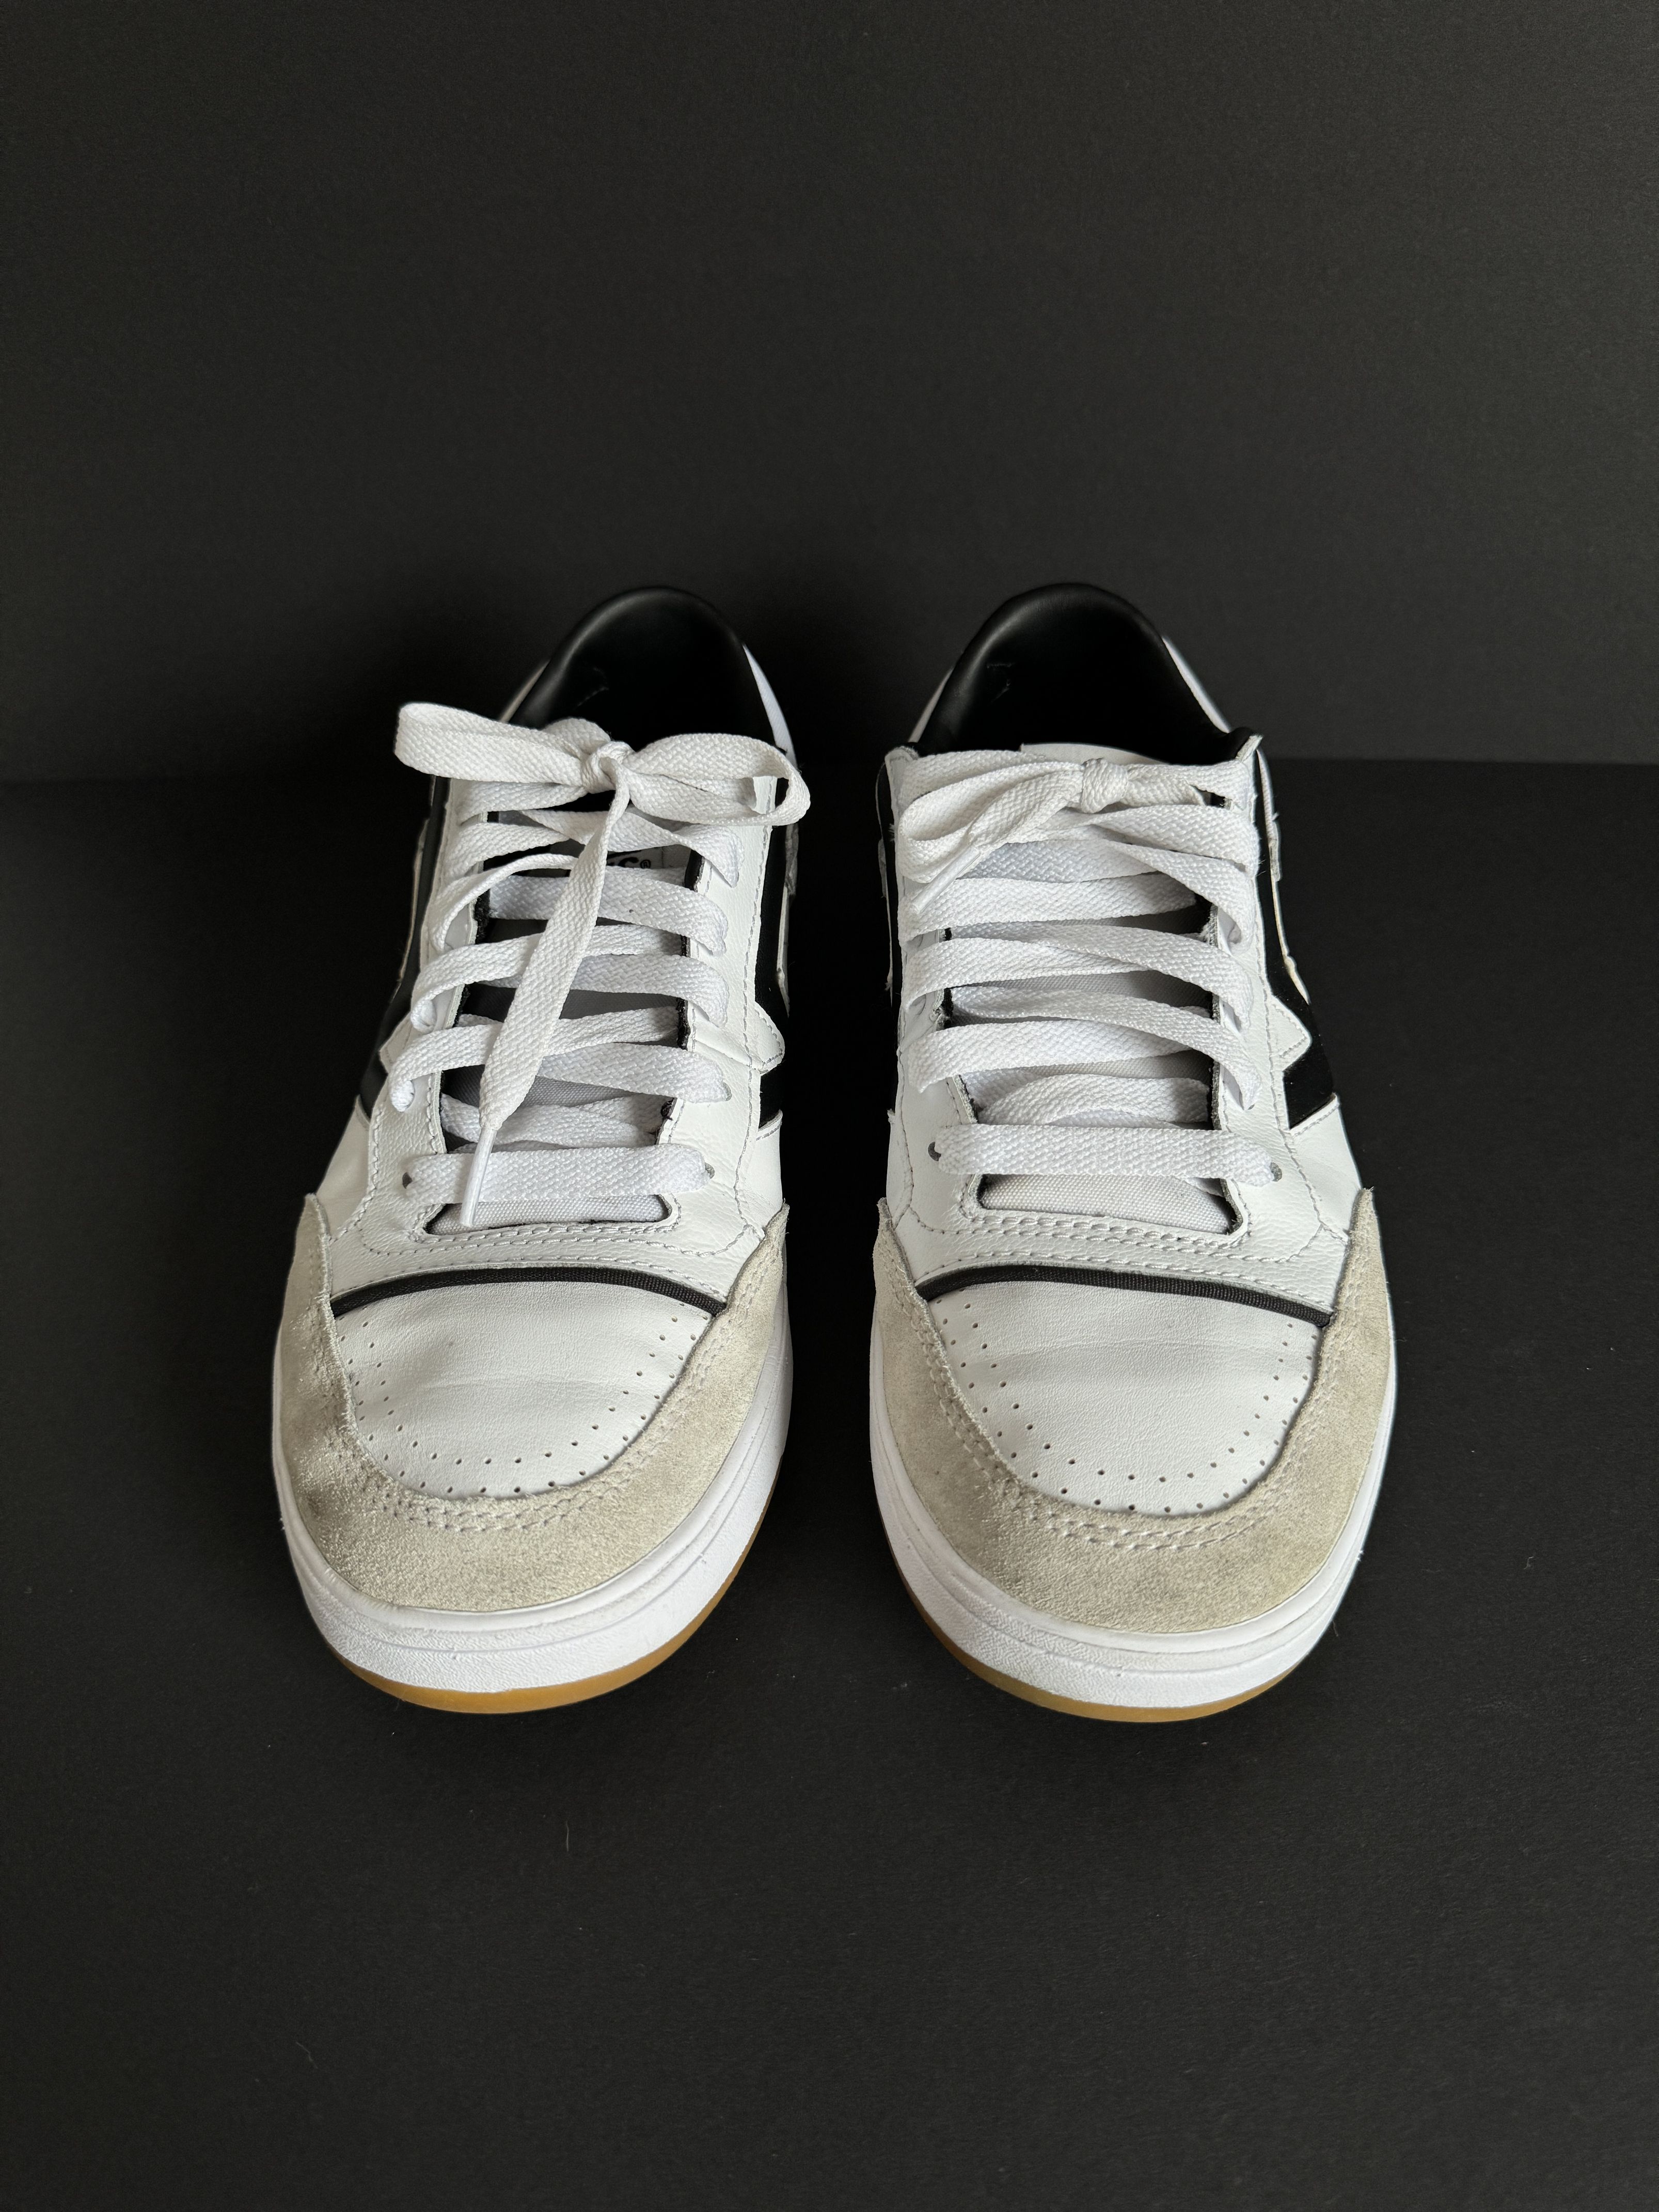 Vans Sneakersy Lowland Cc Jmp R True White/Black rozmiar 42.5